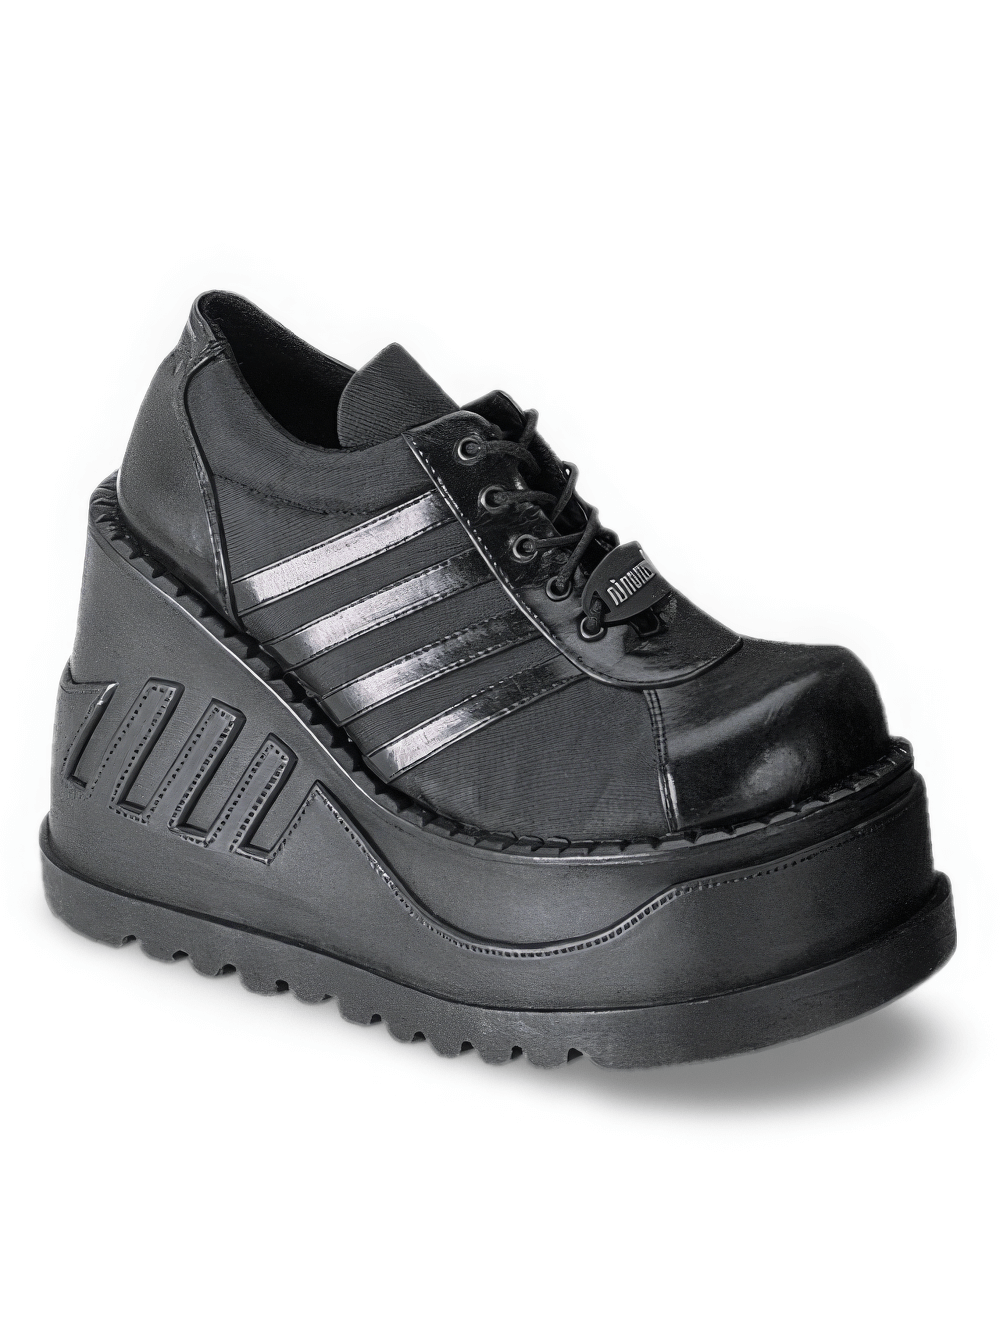 DEMONIA Black Cyber Goth Shoes with Wedge Platform